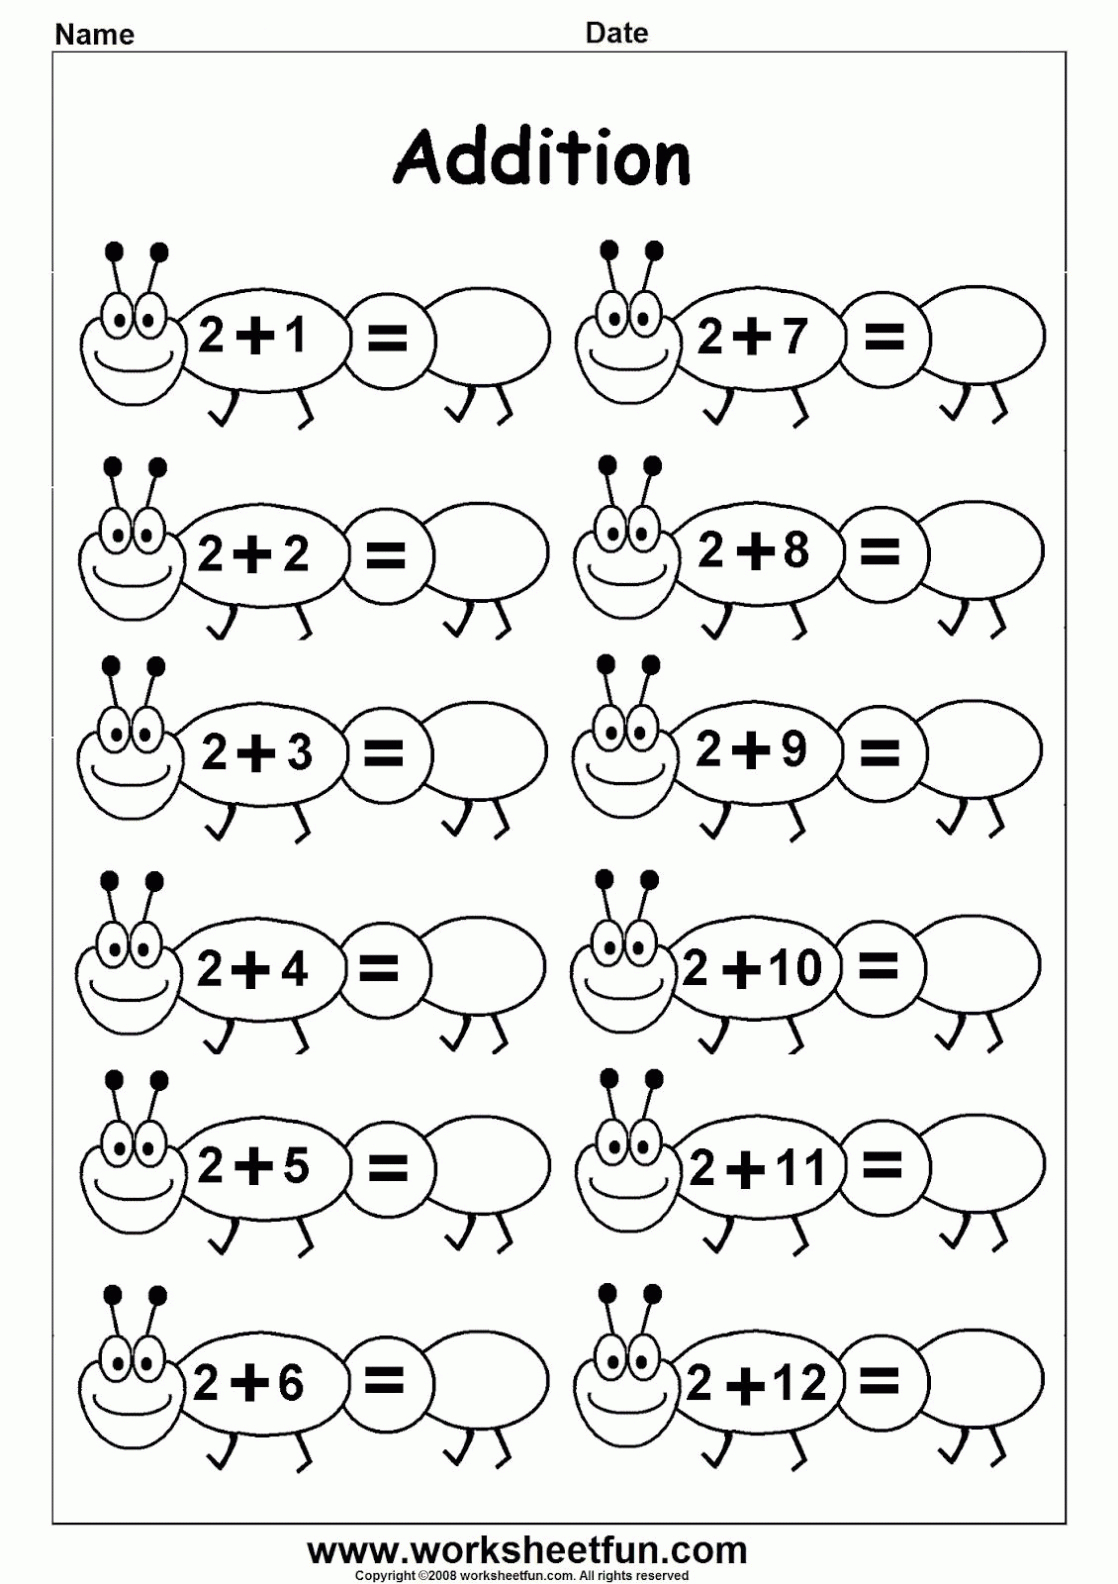 Free Printable Preschool Math Worksheets To Learning - Math - Free Printable Preschool Math Worksheets